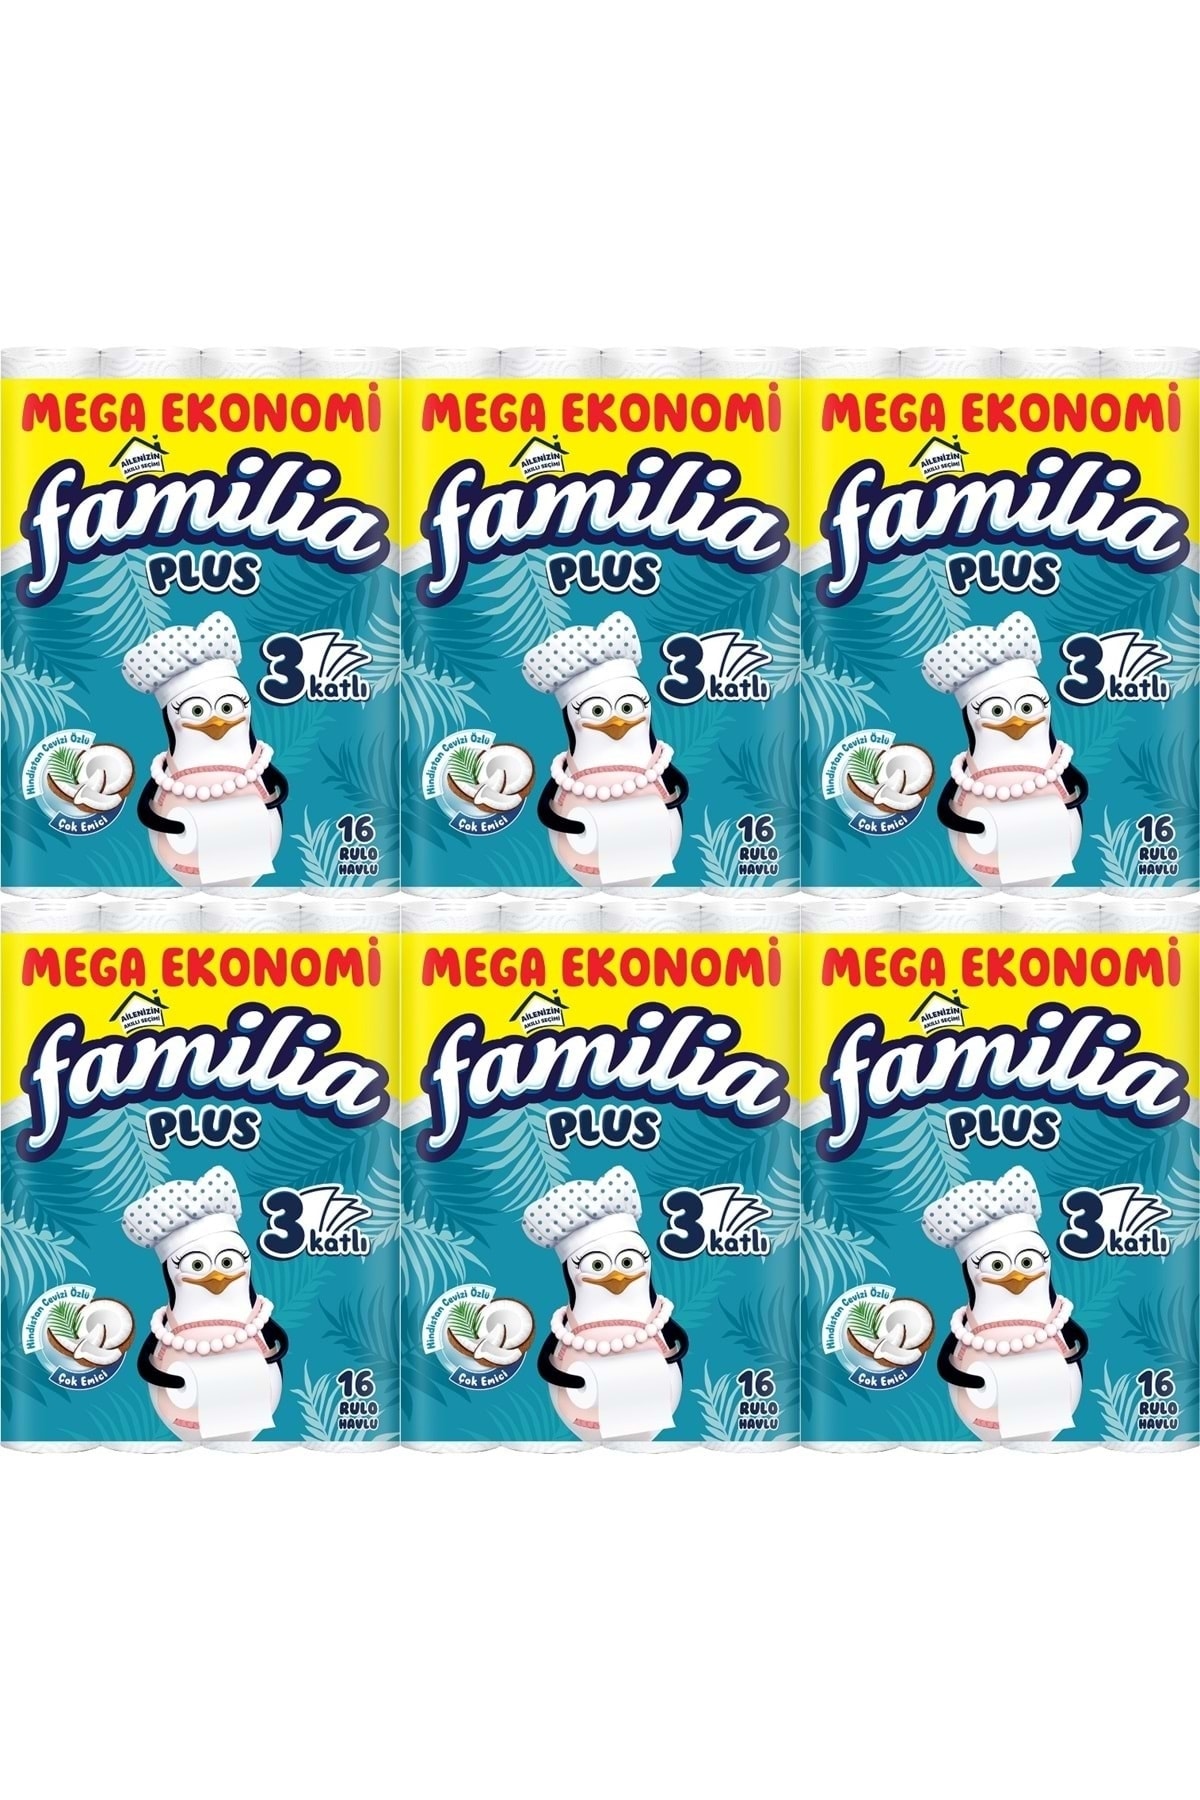 Familia Plus Kağıt Havlu 3 Katlı Coconut Özlü 96 Lı Paket (6pk*16)